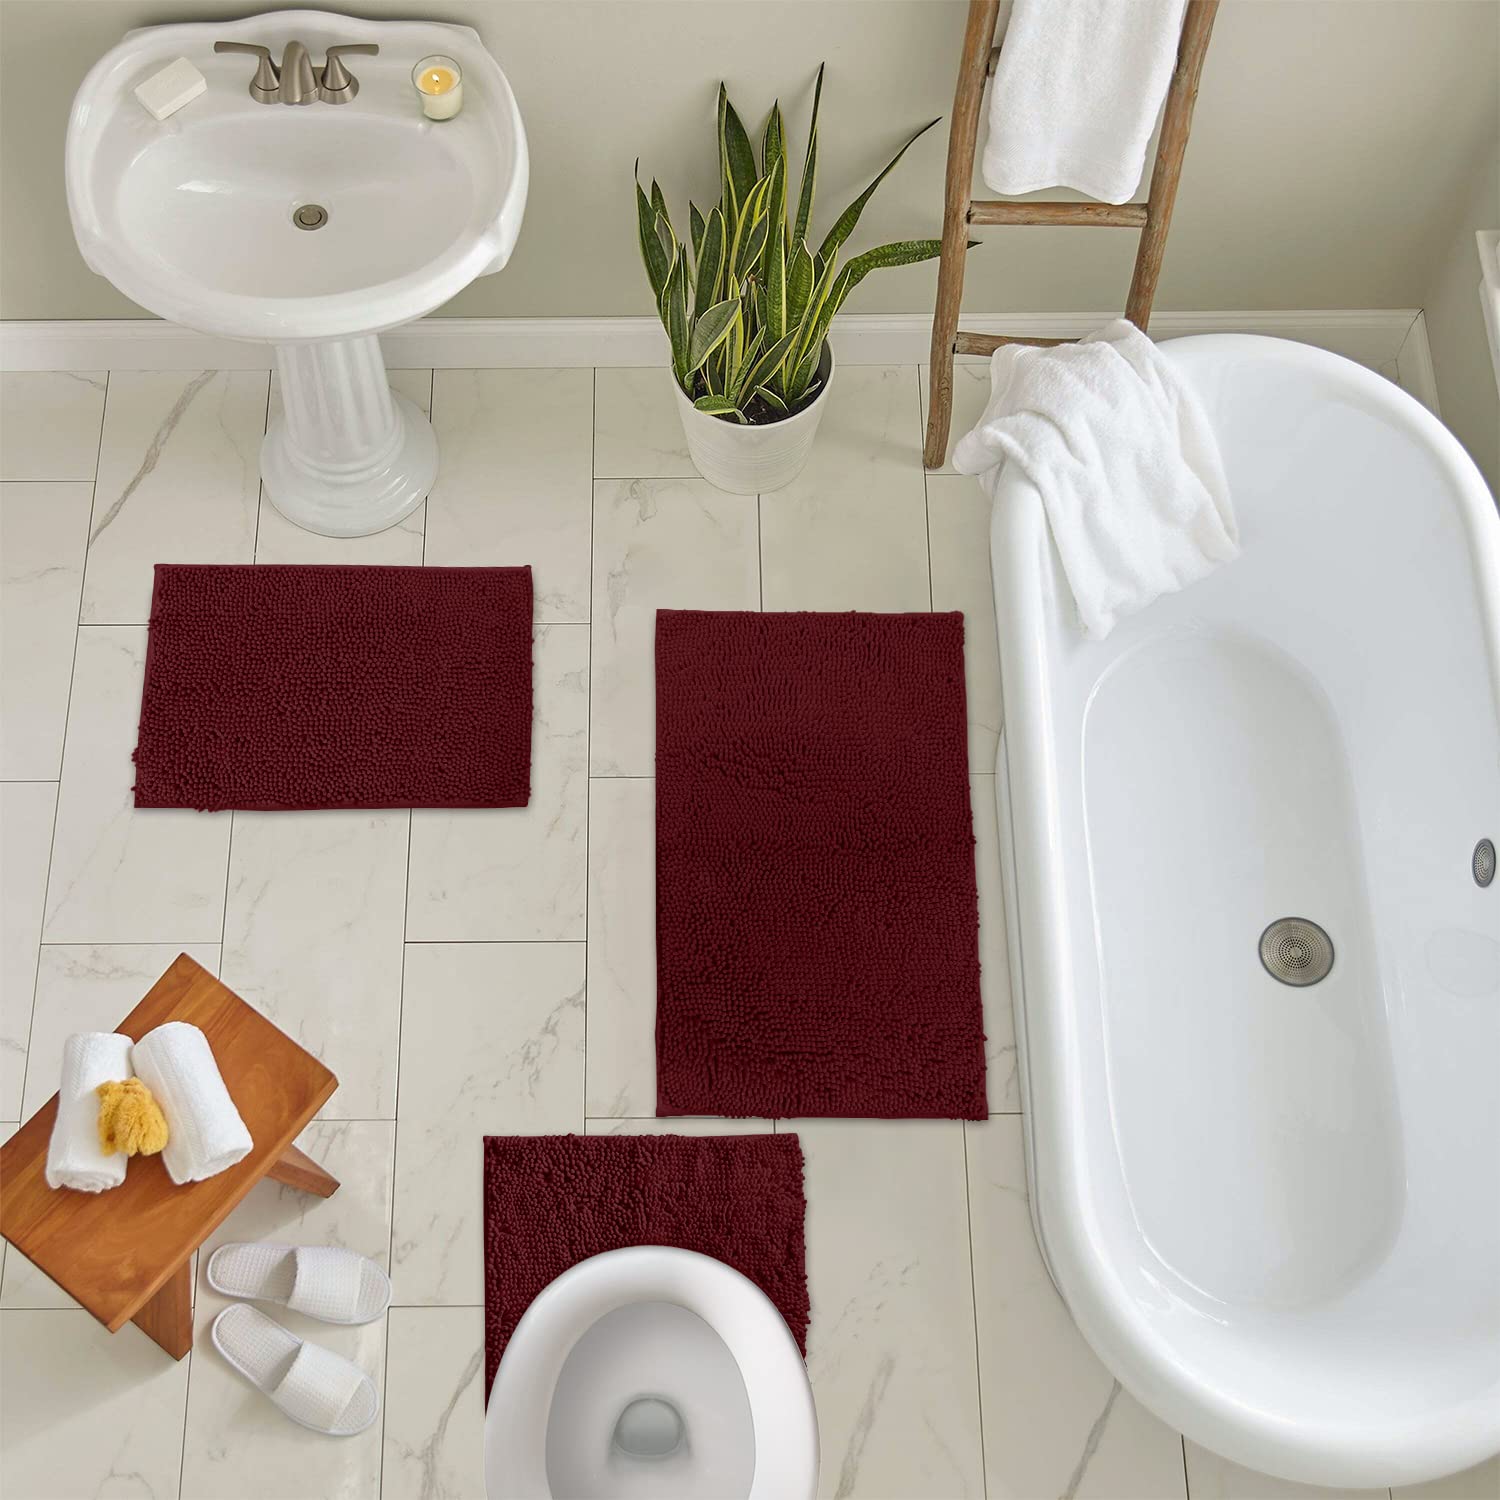 LuxUrux Bathroom Rugs 3pc Non-Slip Shaggy Chenille Bathroom Mat Set, Includes U-Shaped Contour Toilet Mat, 20 x 30'' and 16 x 24'' Bath Mat, Machine Washable, Burgundy.  - Very Good